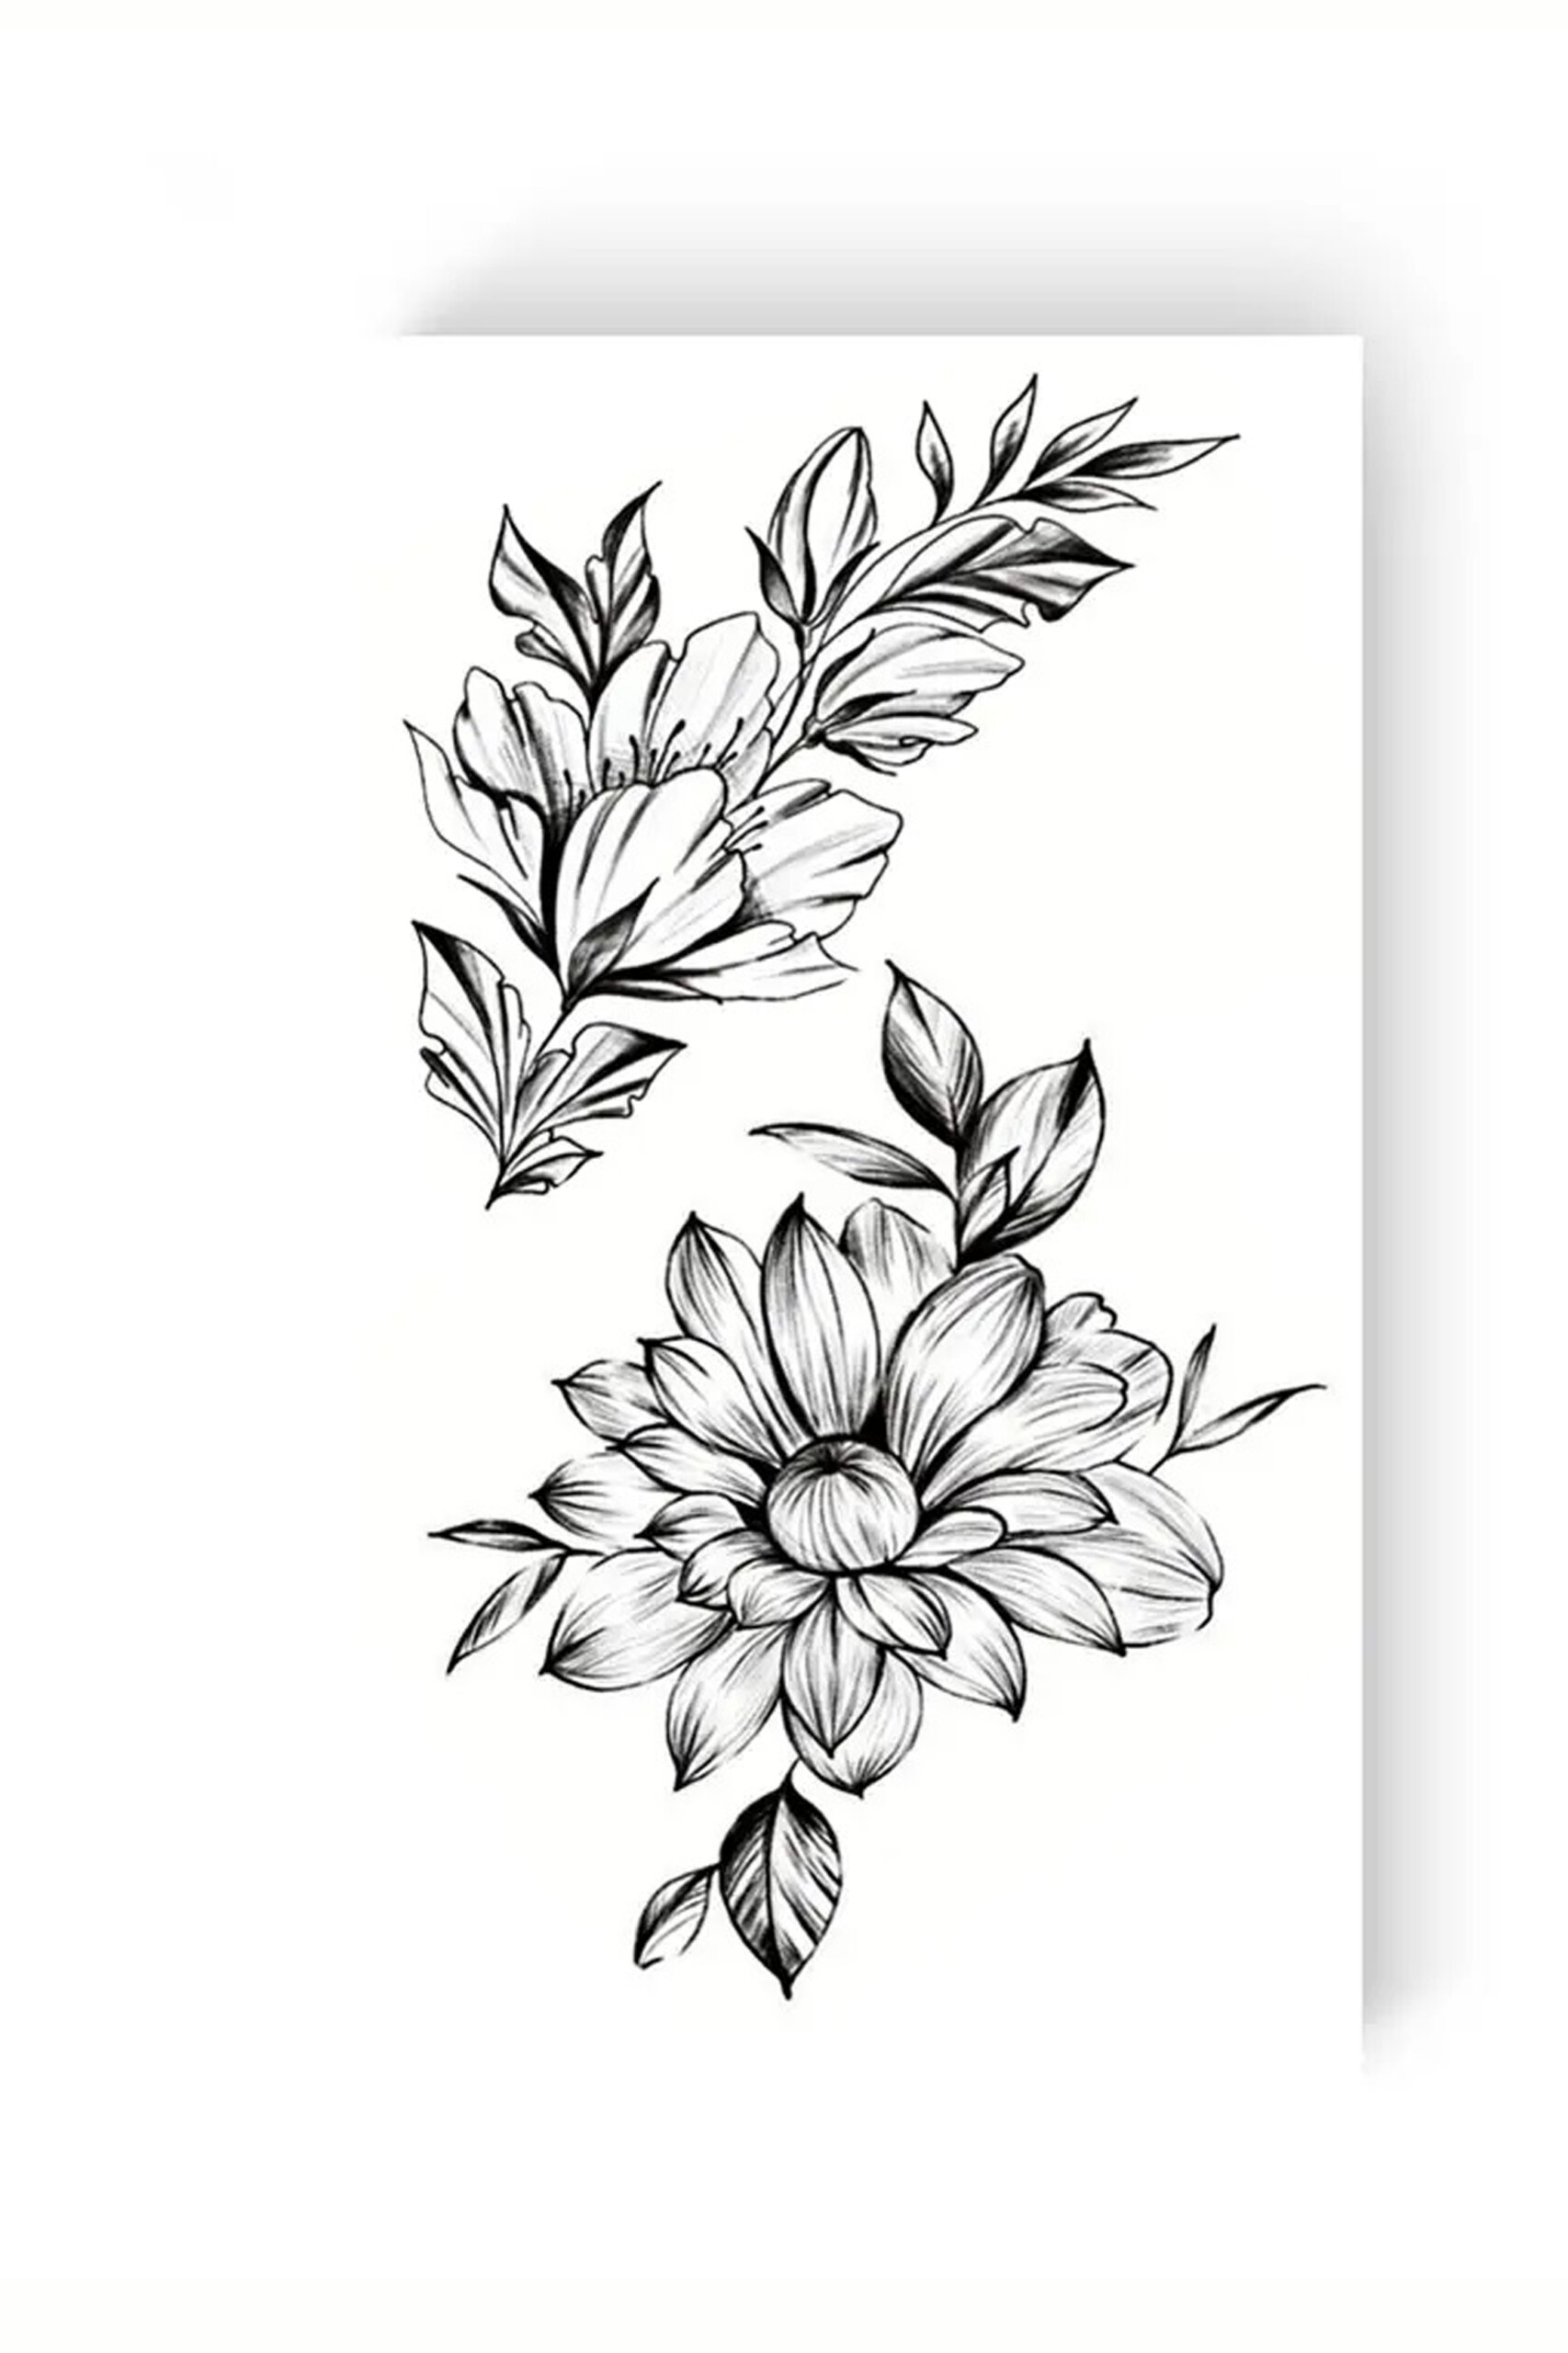 TATTOOSHKA Temporary Tattoo set, Flowers with a sprig